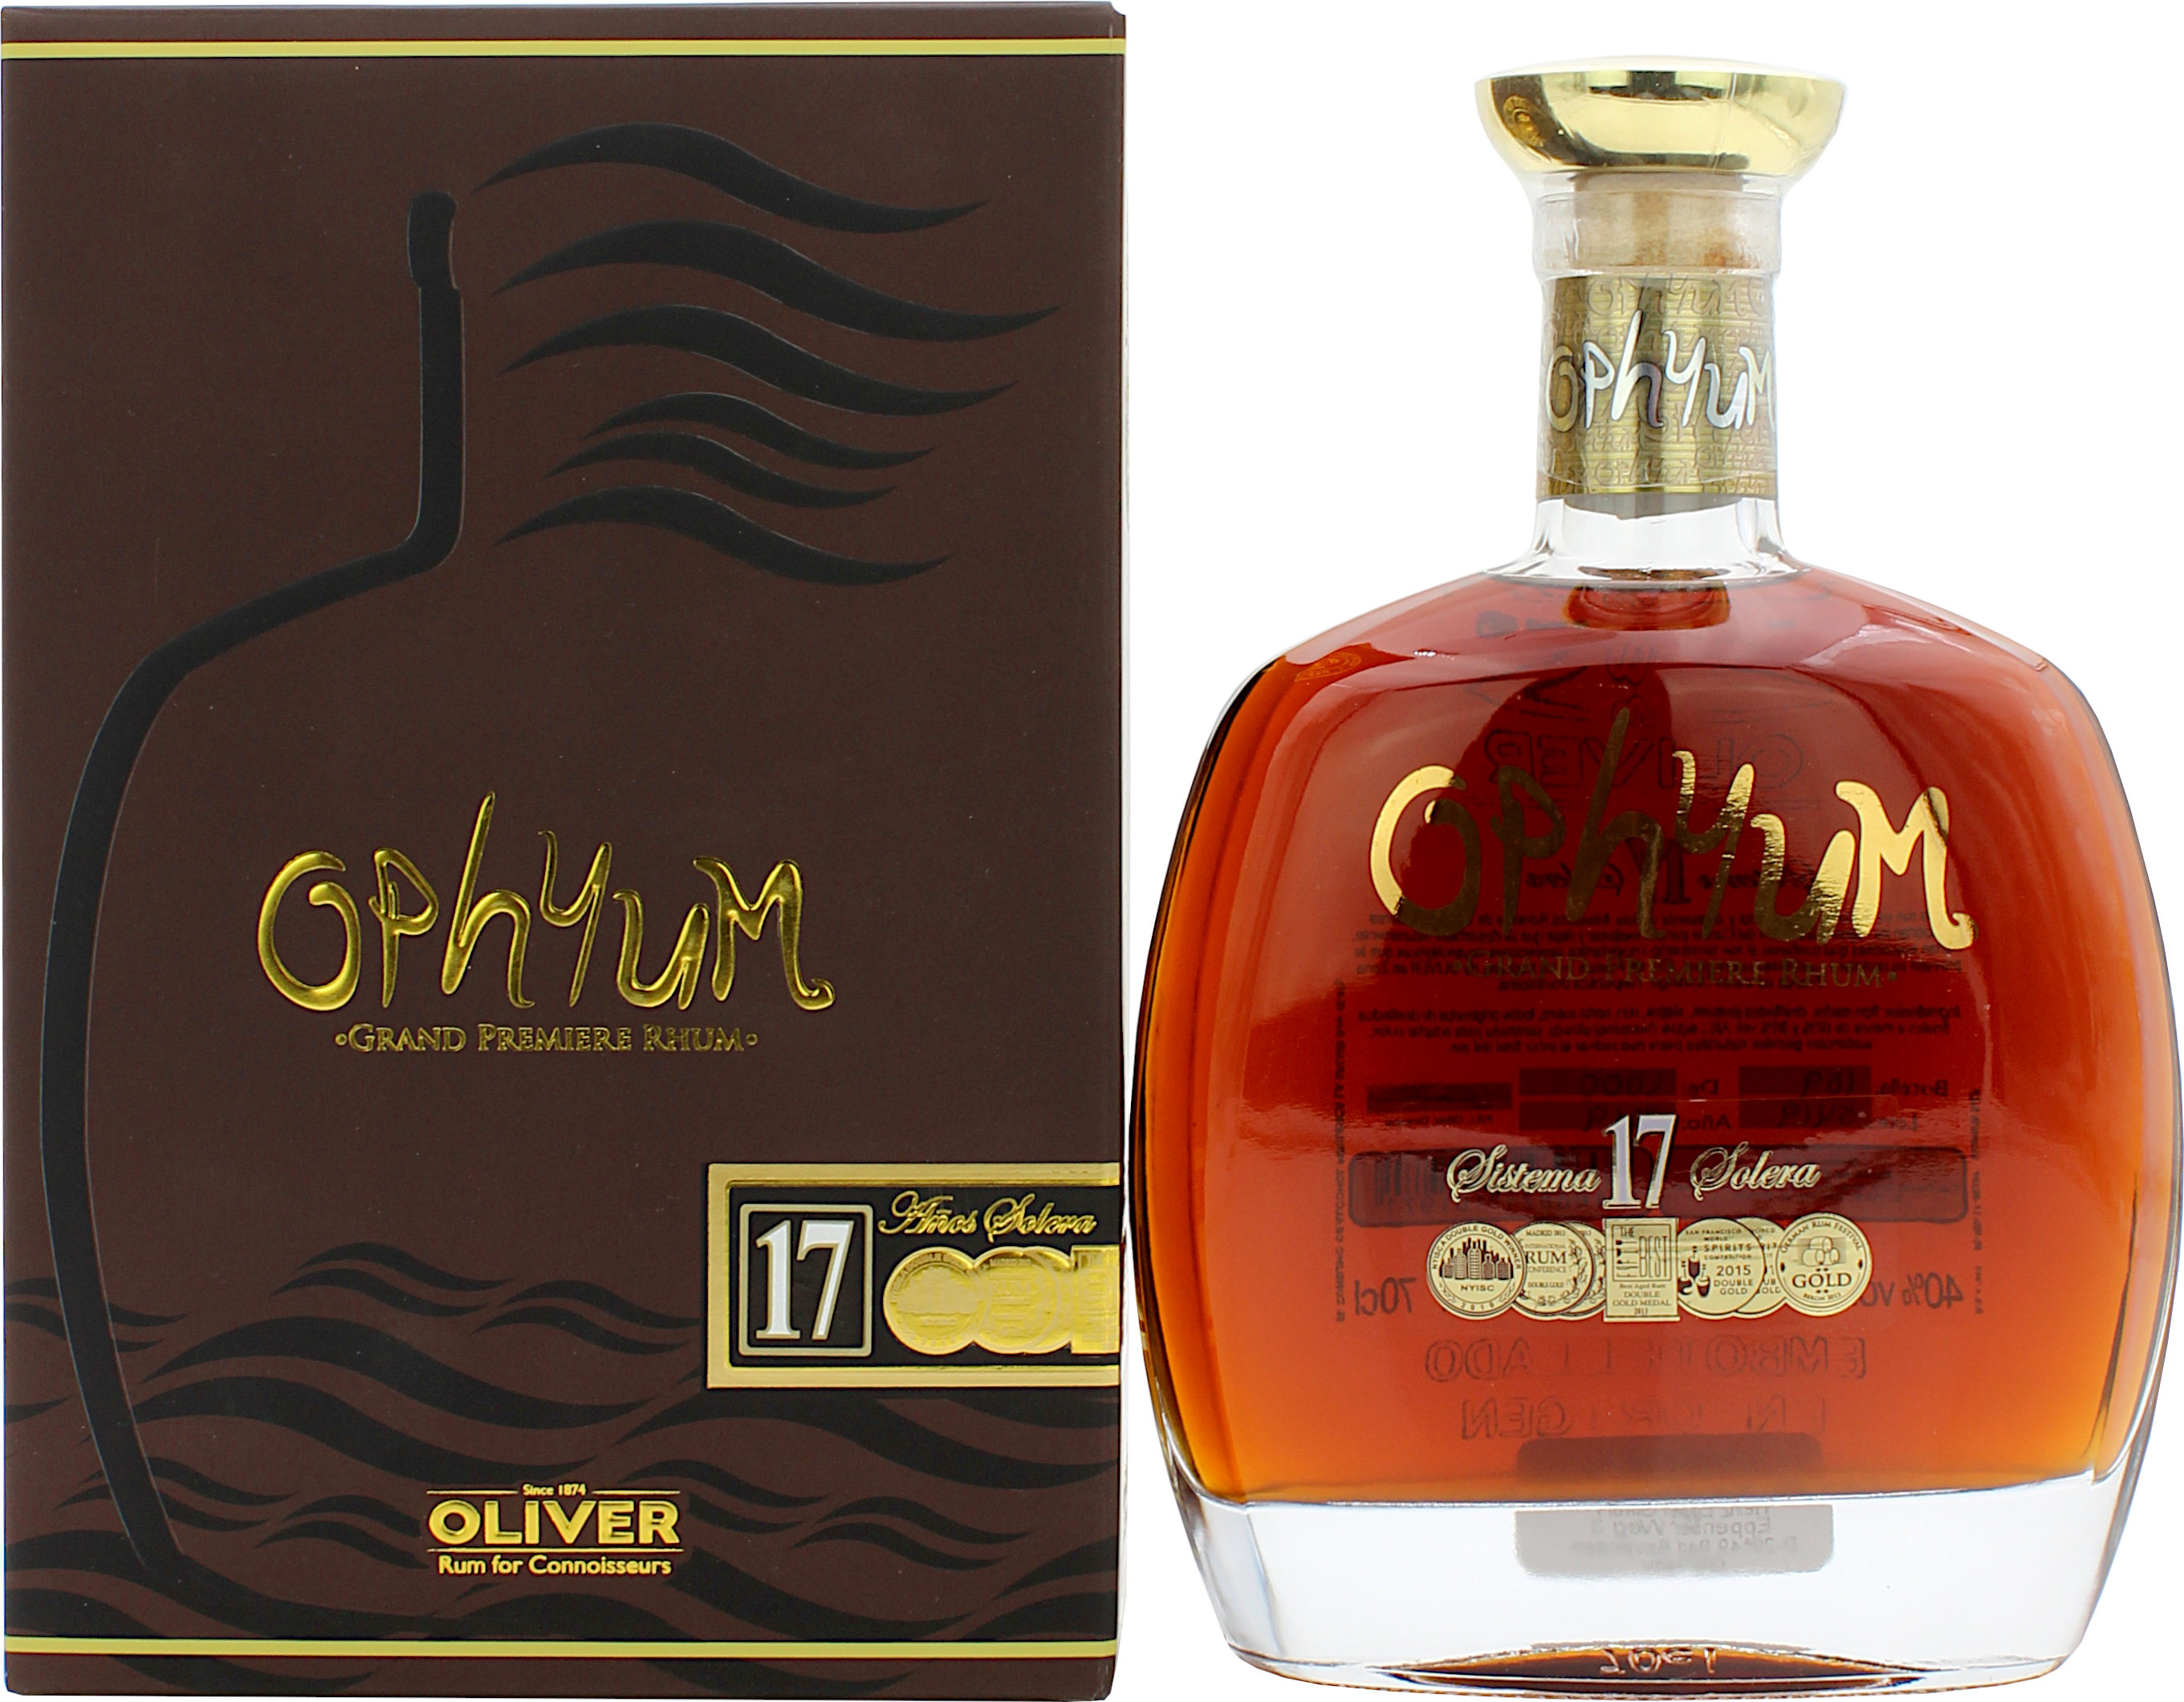 Ophyum Grand Premiere Rhum 17 + 2 glasses - Dark rum